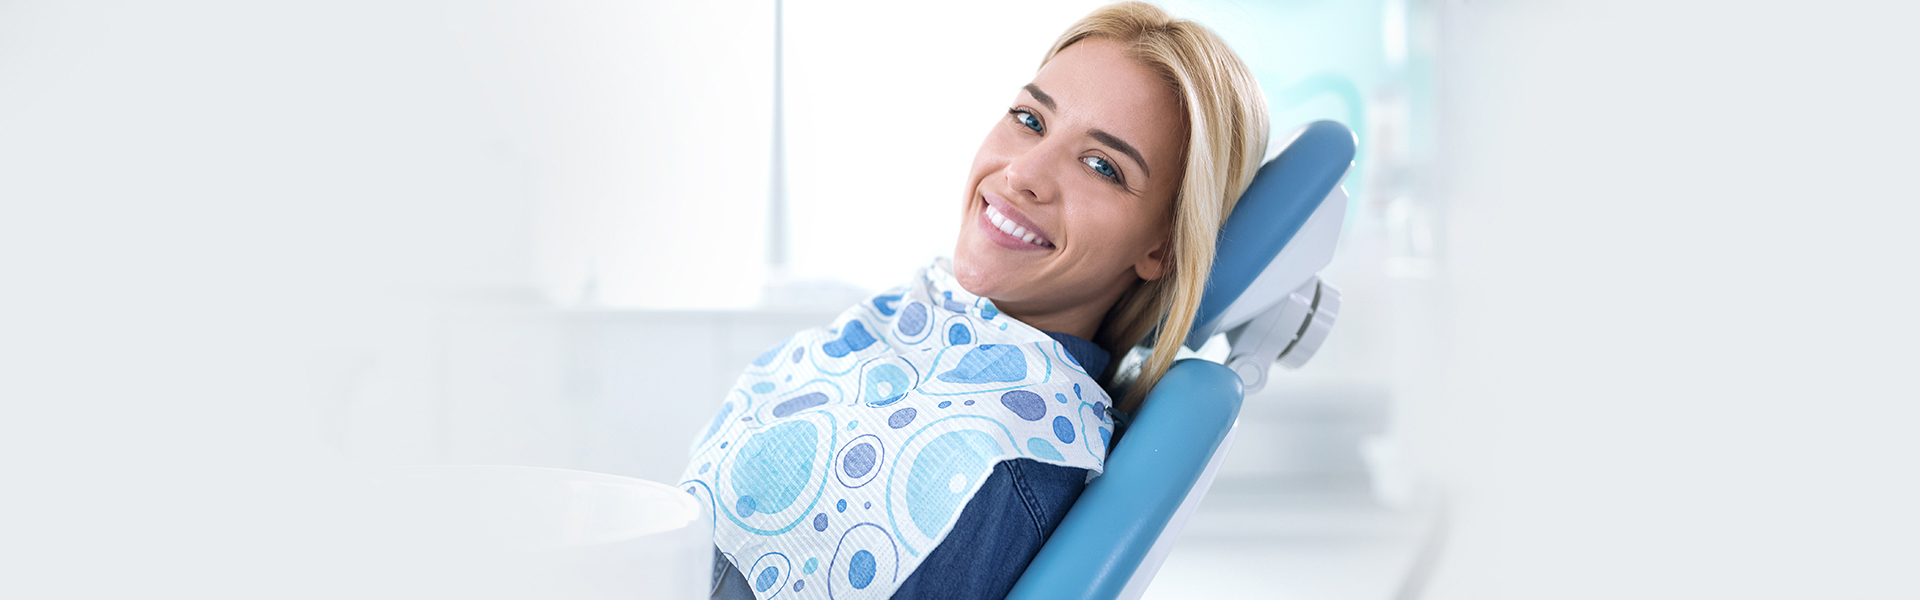 Dental Bridges vs Dental Implants: Which is Good for You?